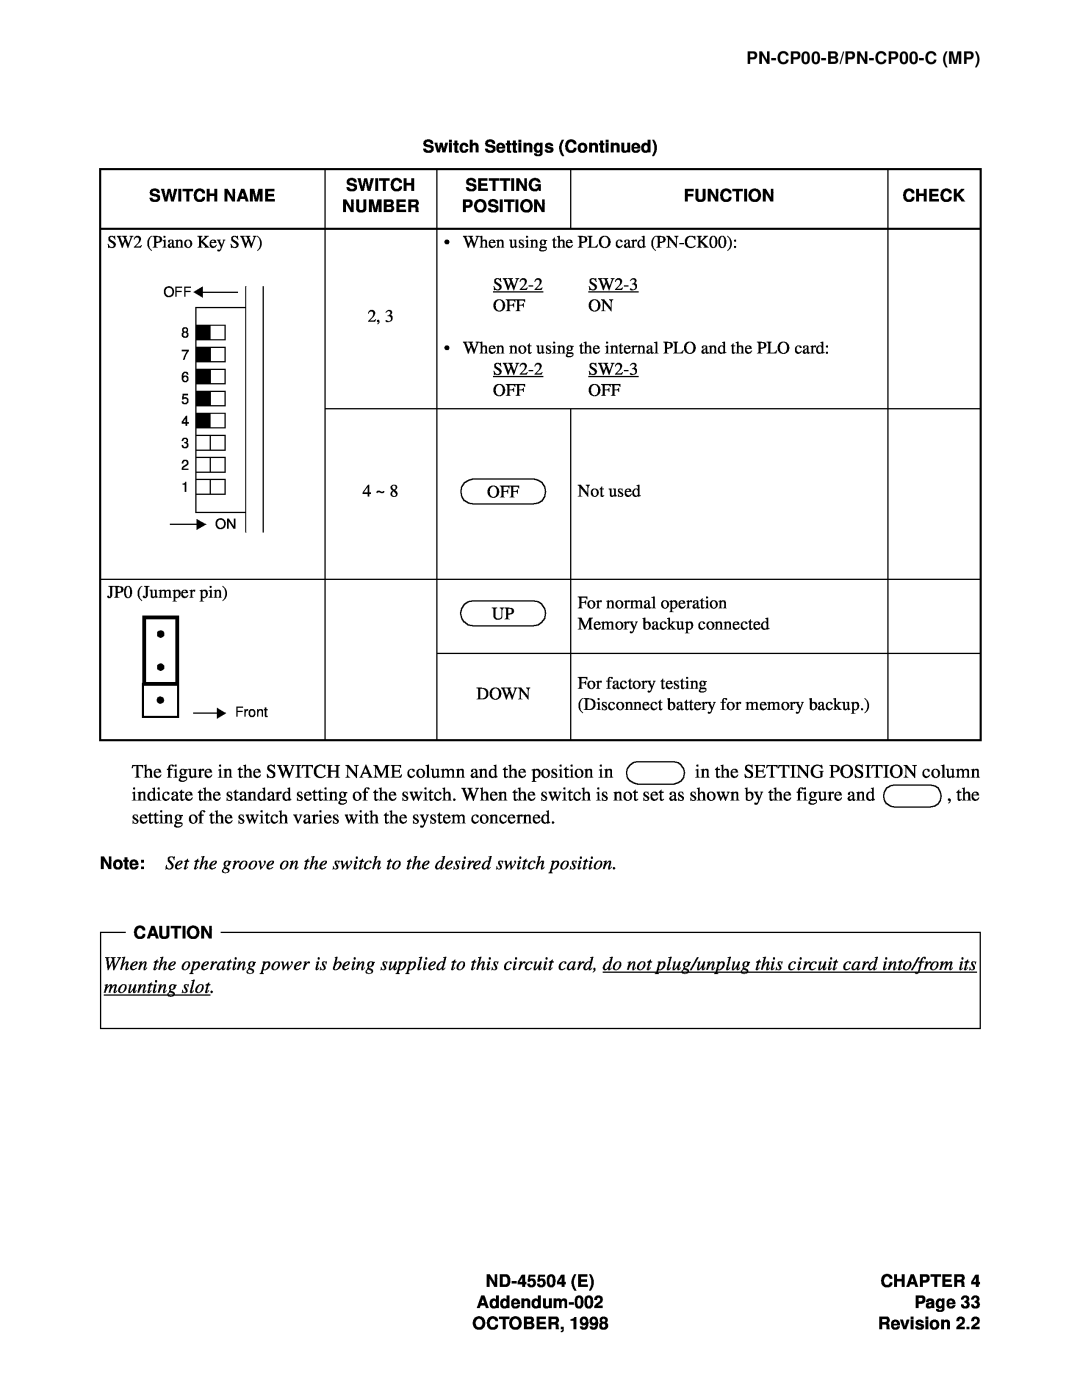 NEC 2000 IVS manual PN-CP00-B/PN-CP00-CMP Switch Settings Continued 